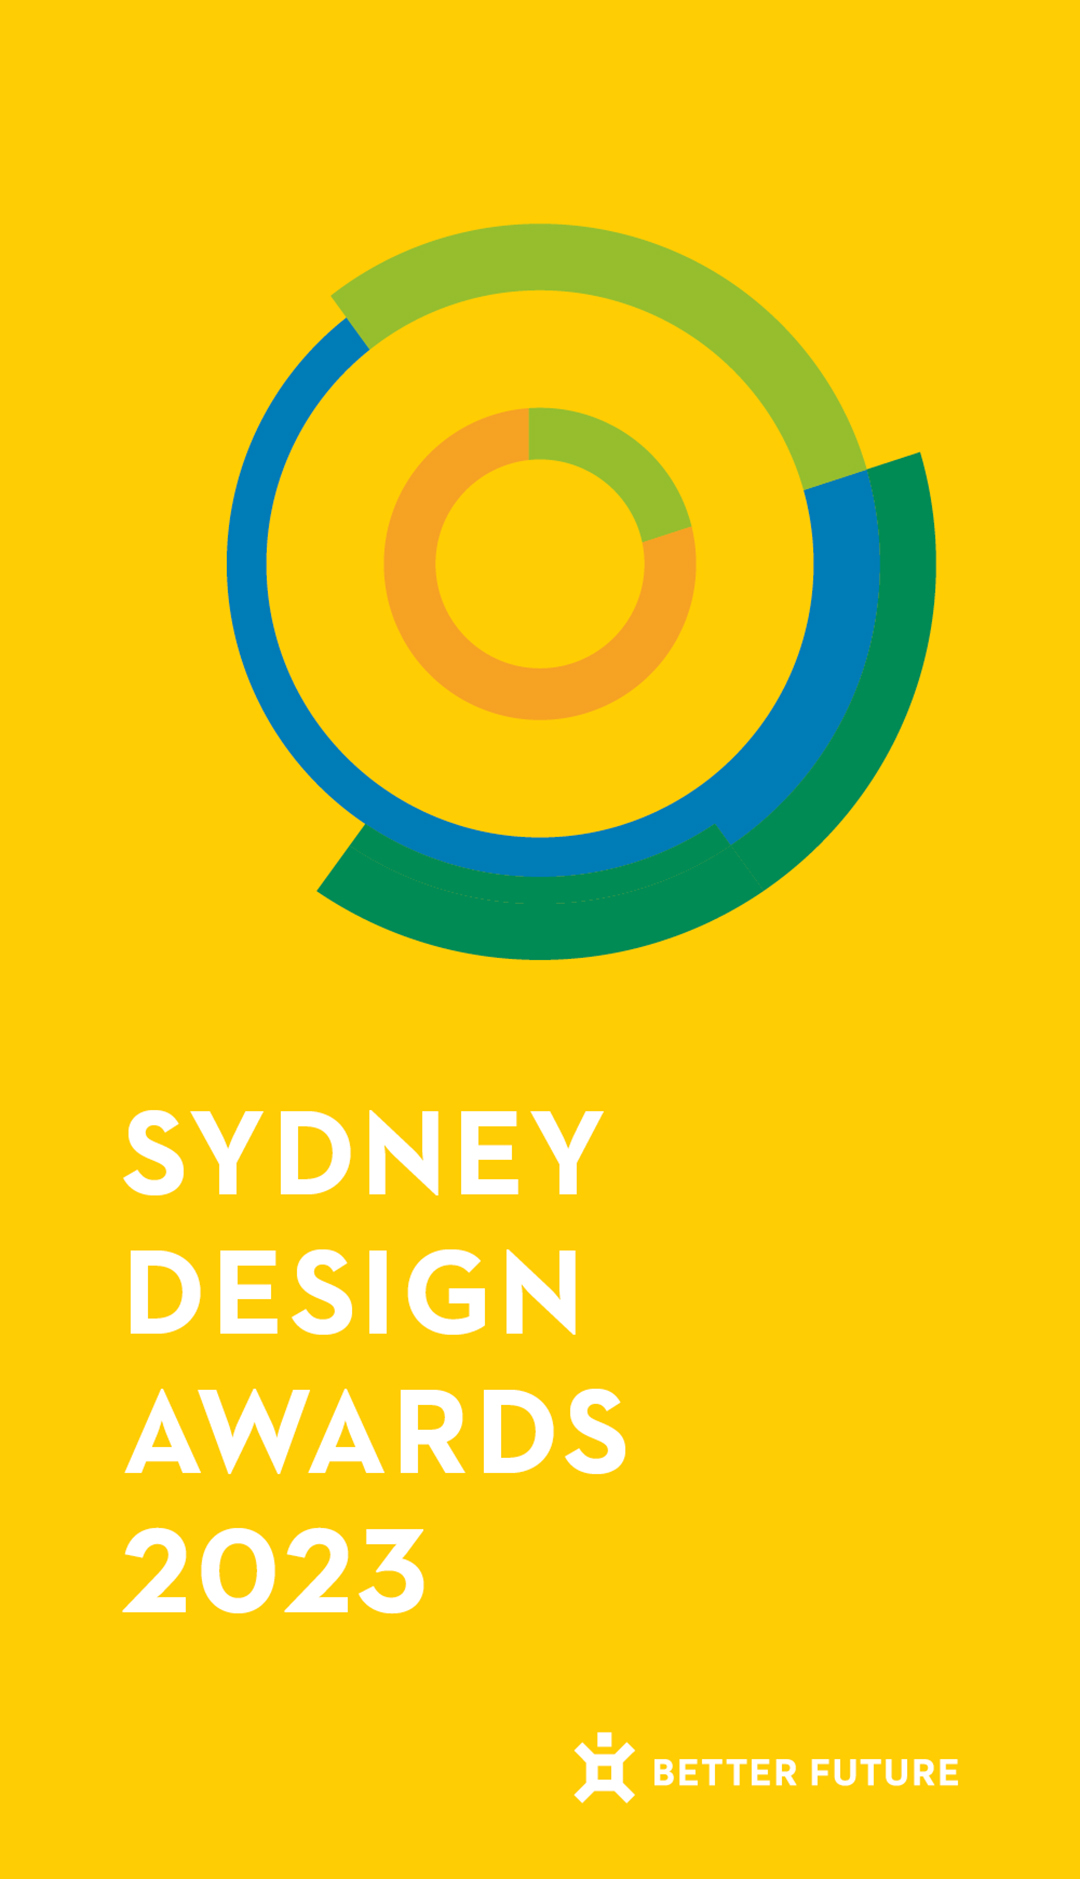 Sydney Design Awards 2023